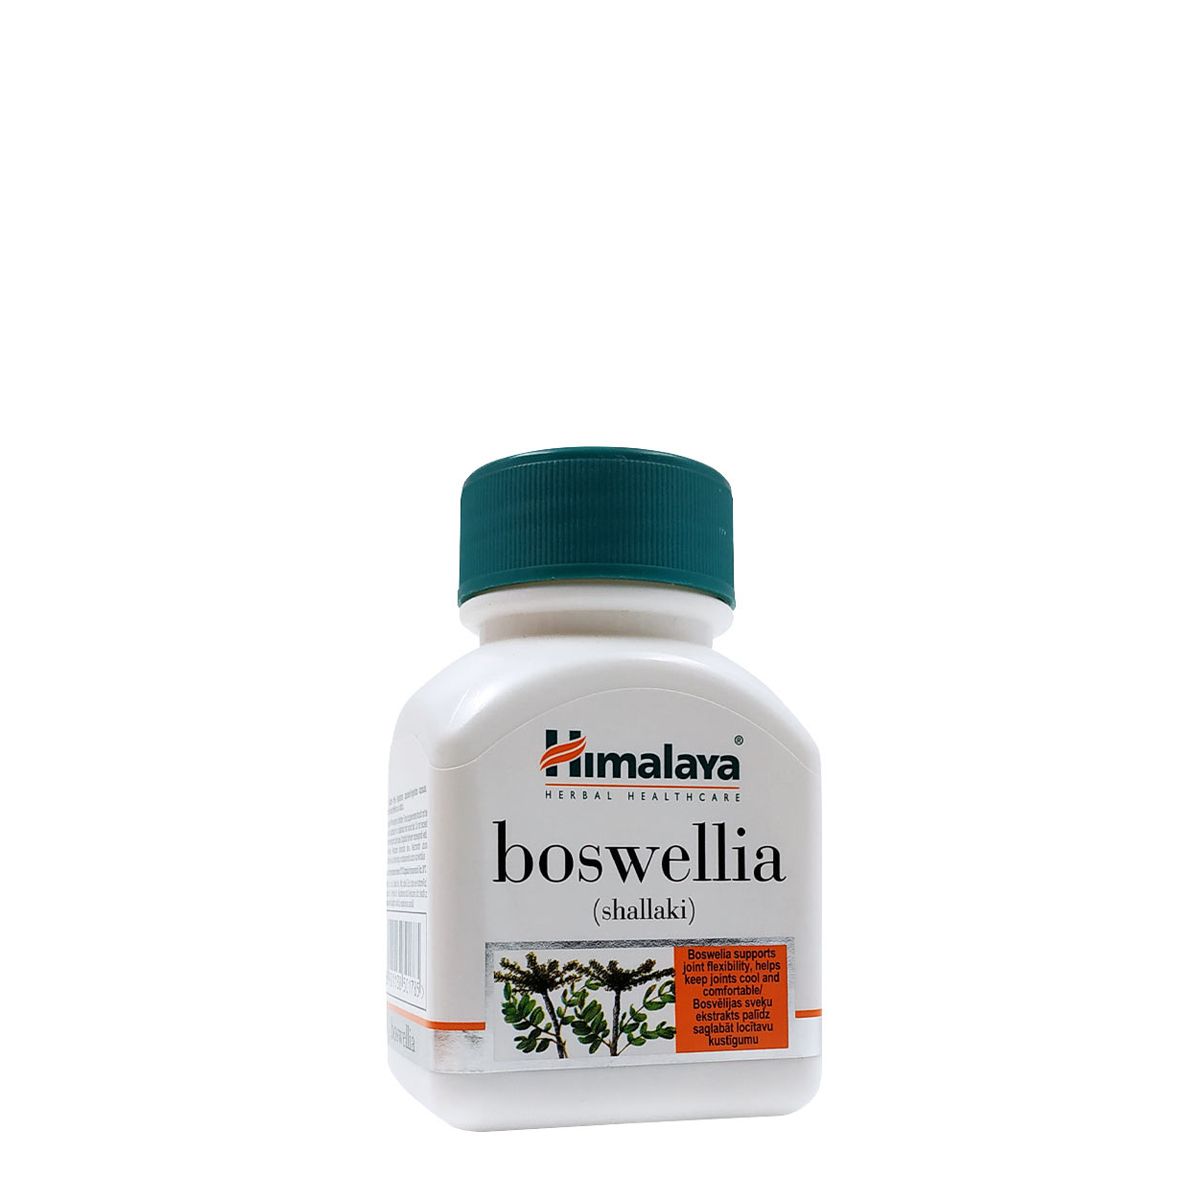 Boswellia indiai tömjénfa kivonat, Himalaya Boswellia, 60 kapszula